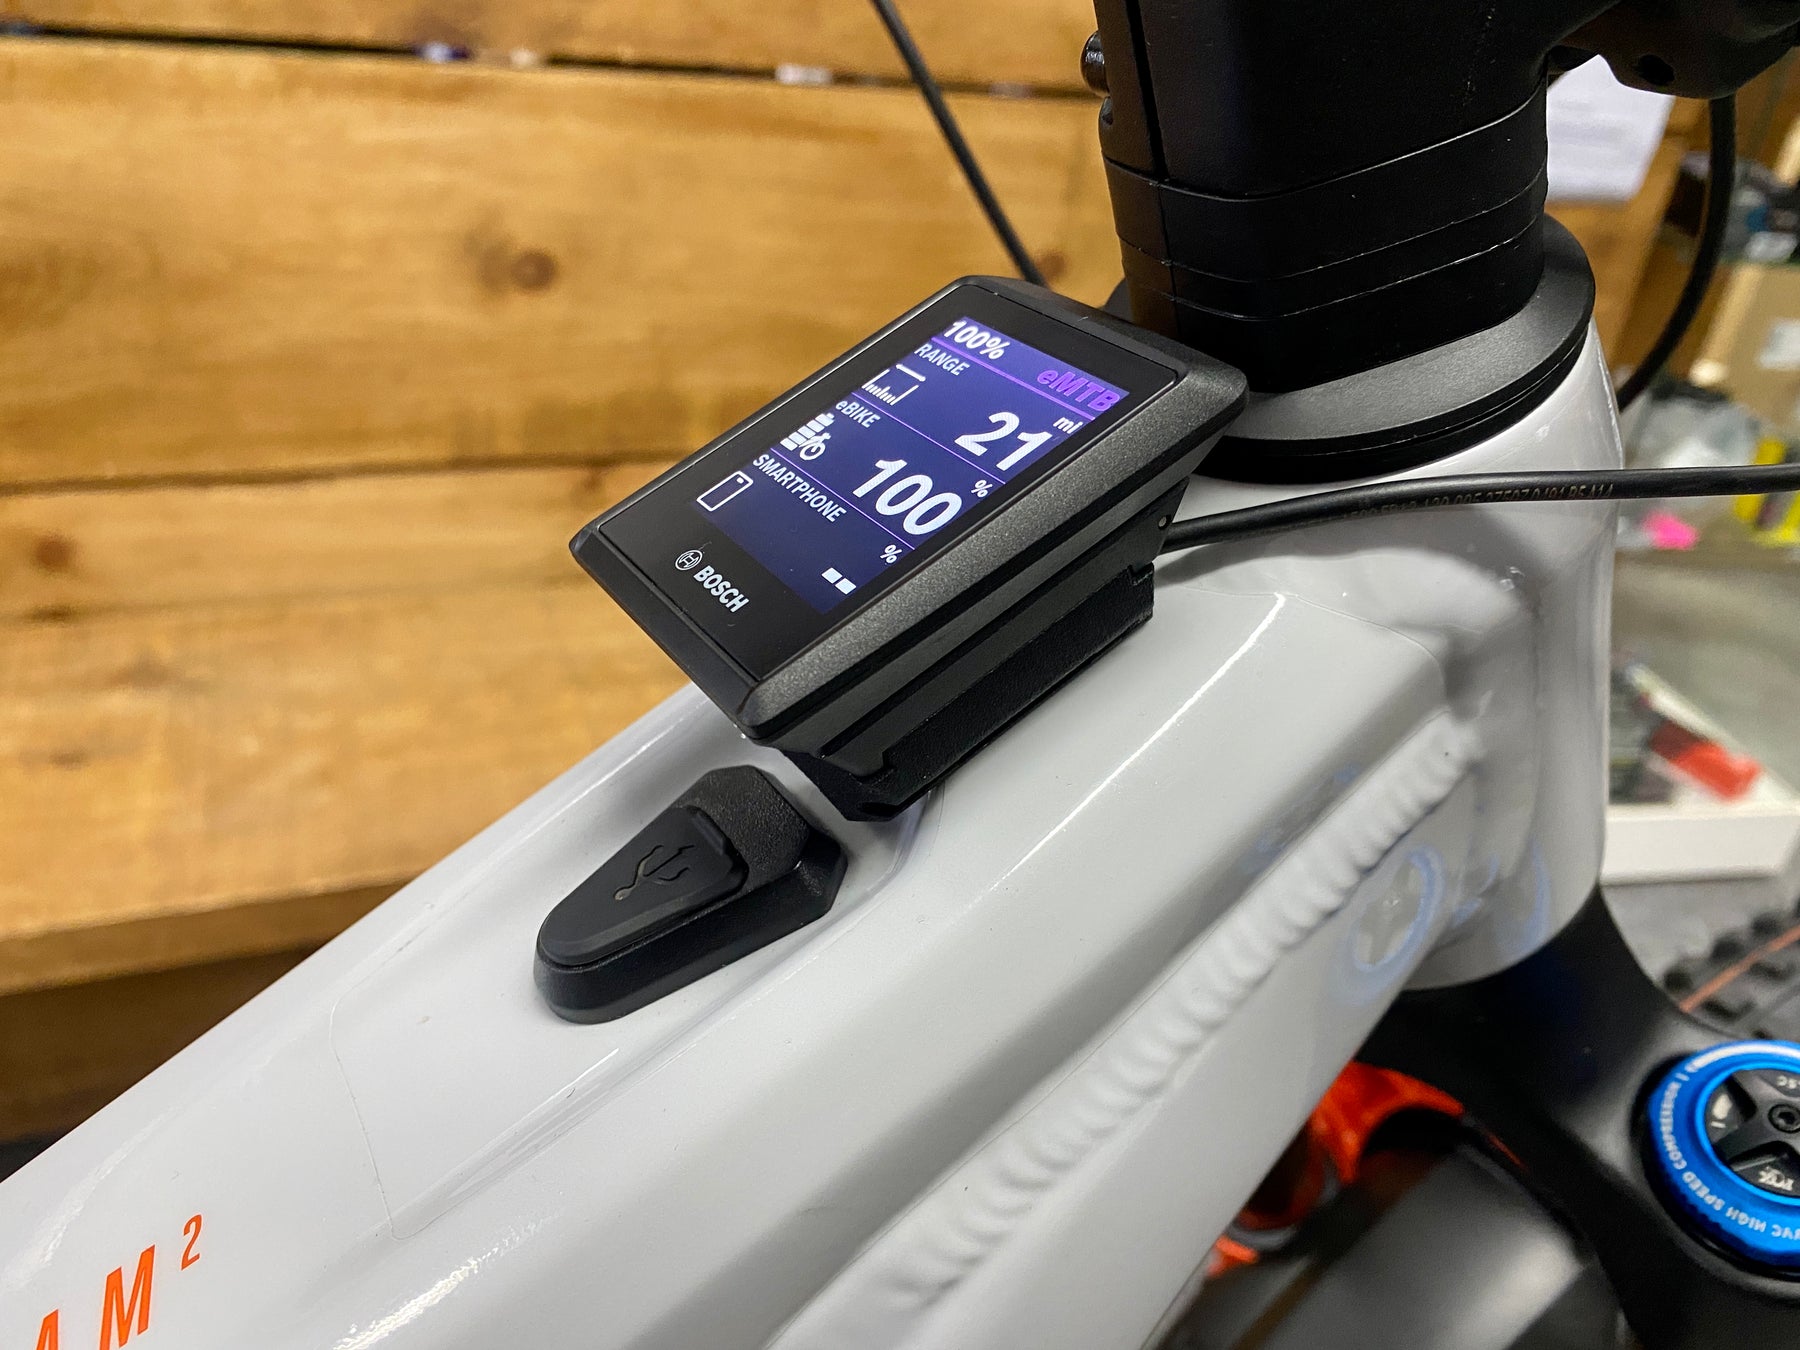 Bosch Kiox 300 E-Bike Display for Smart System